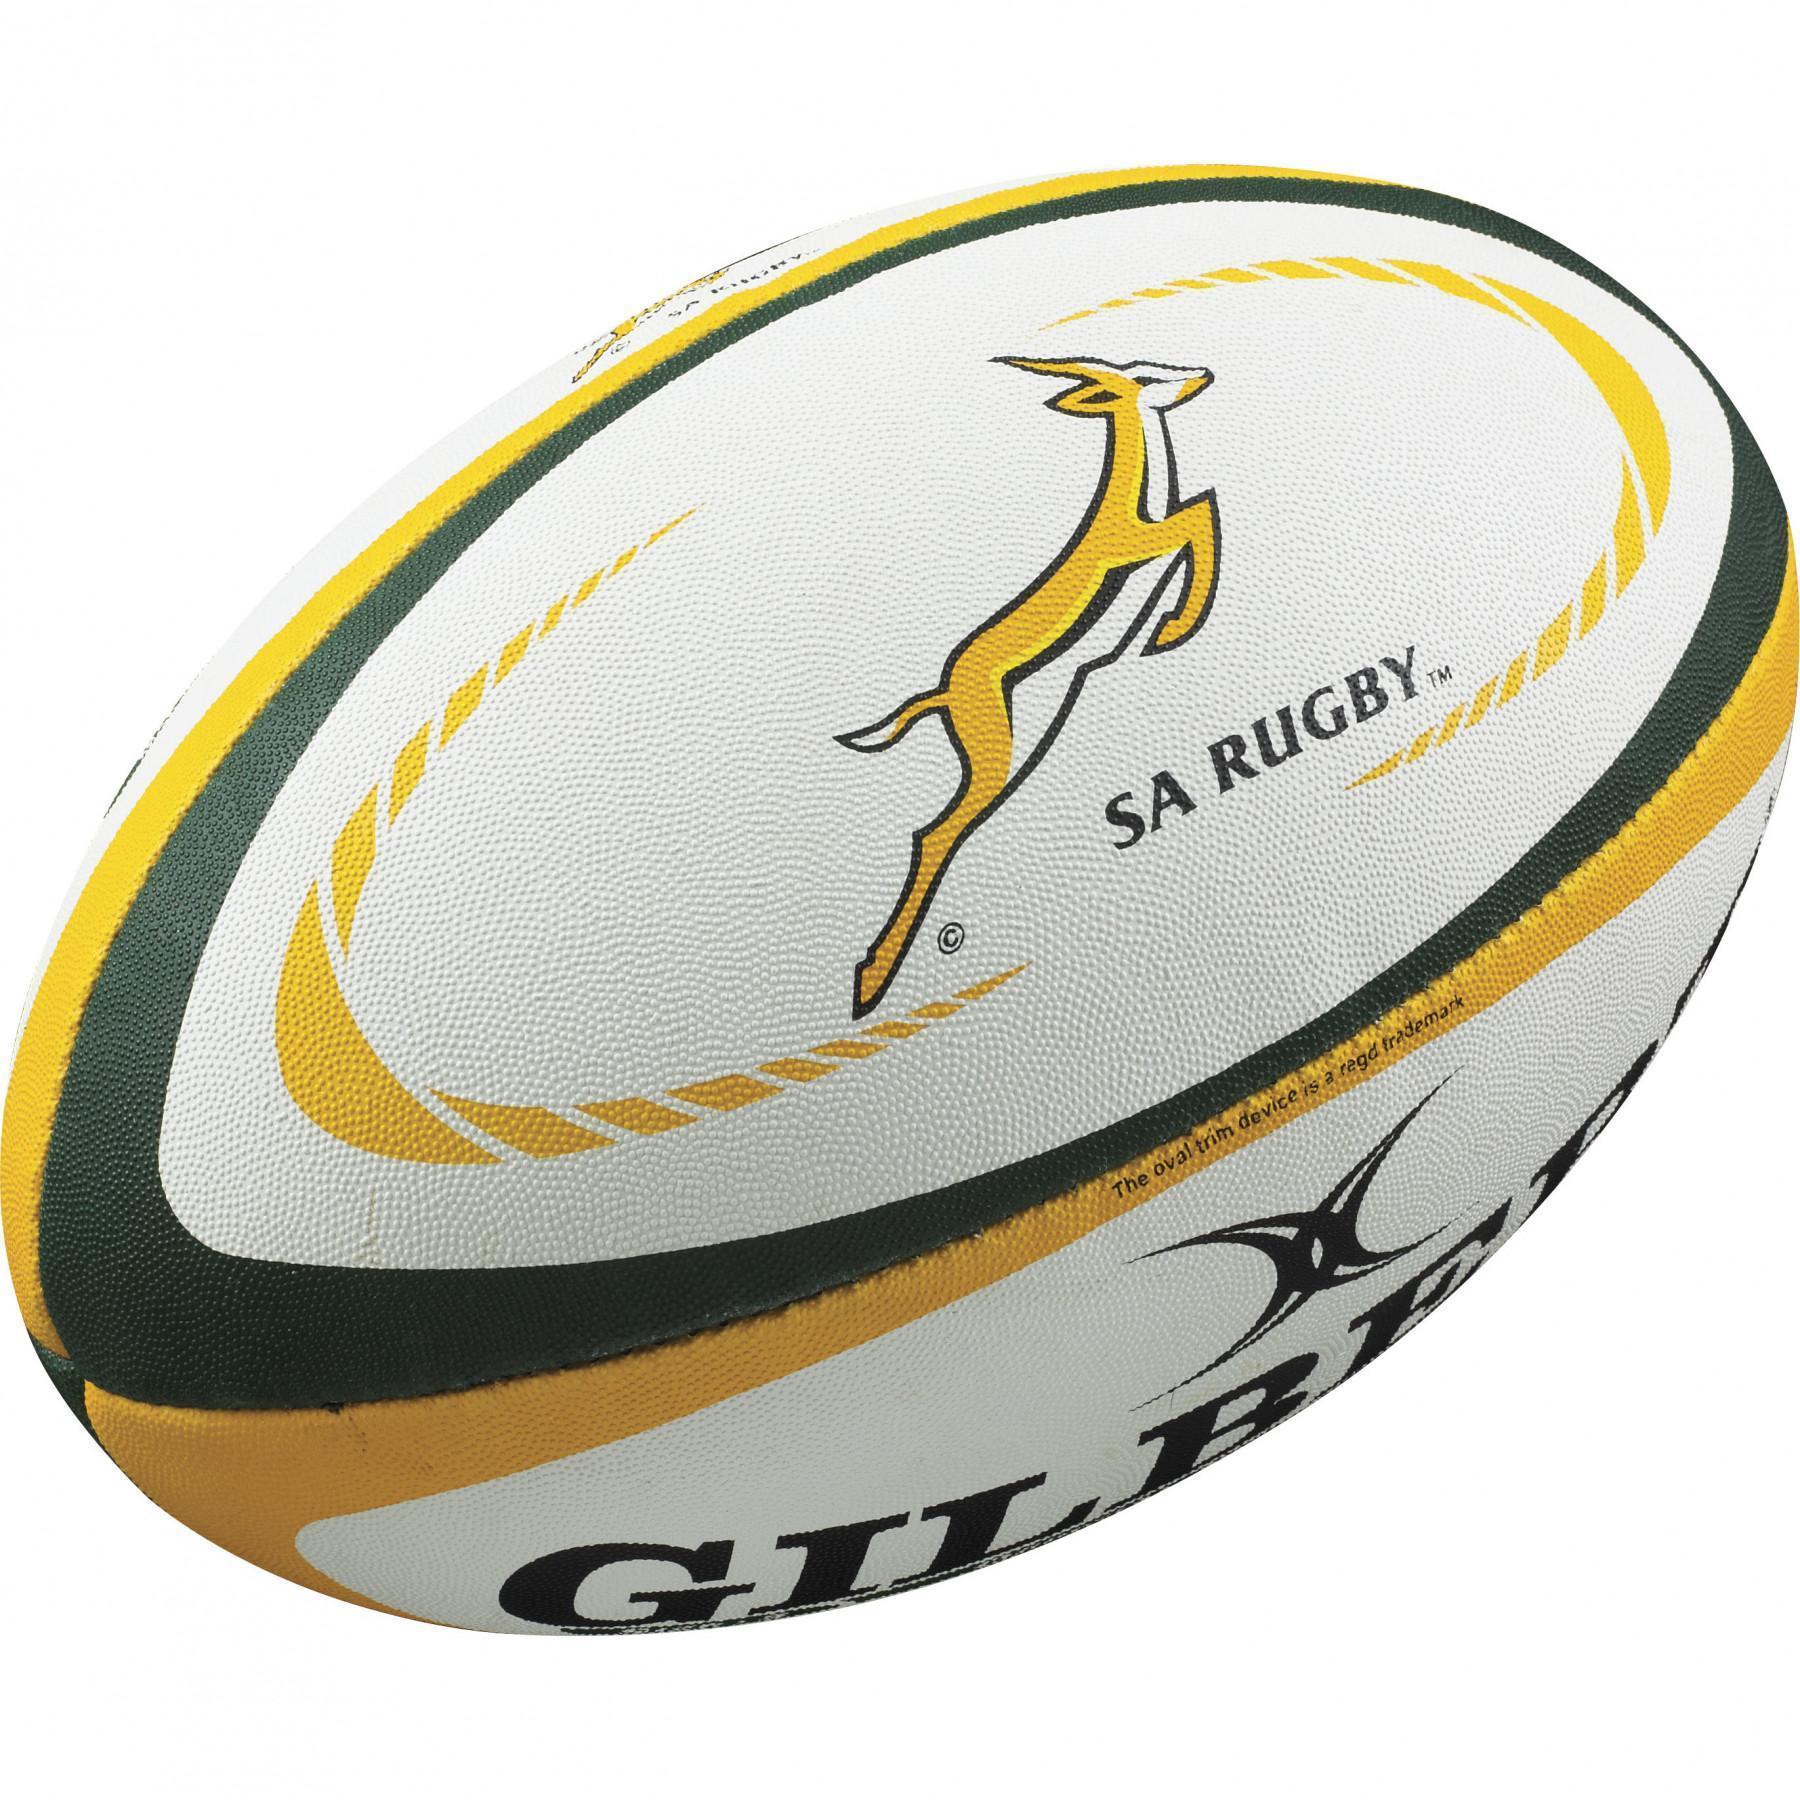 Ballon de rugby Midi Replica Gilbert Afrique du Sud (taille 2)